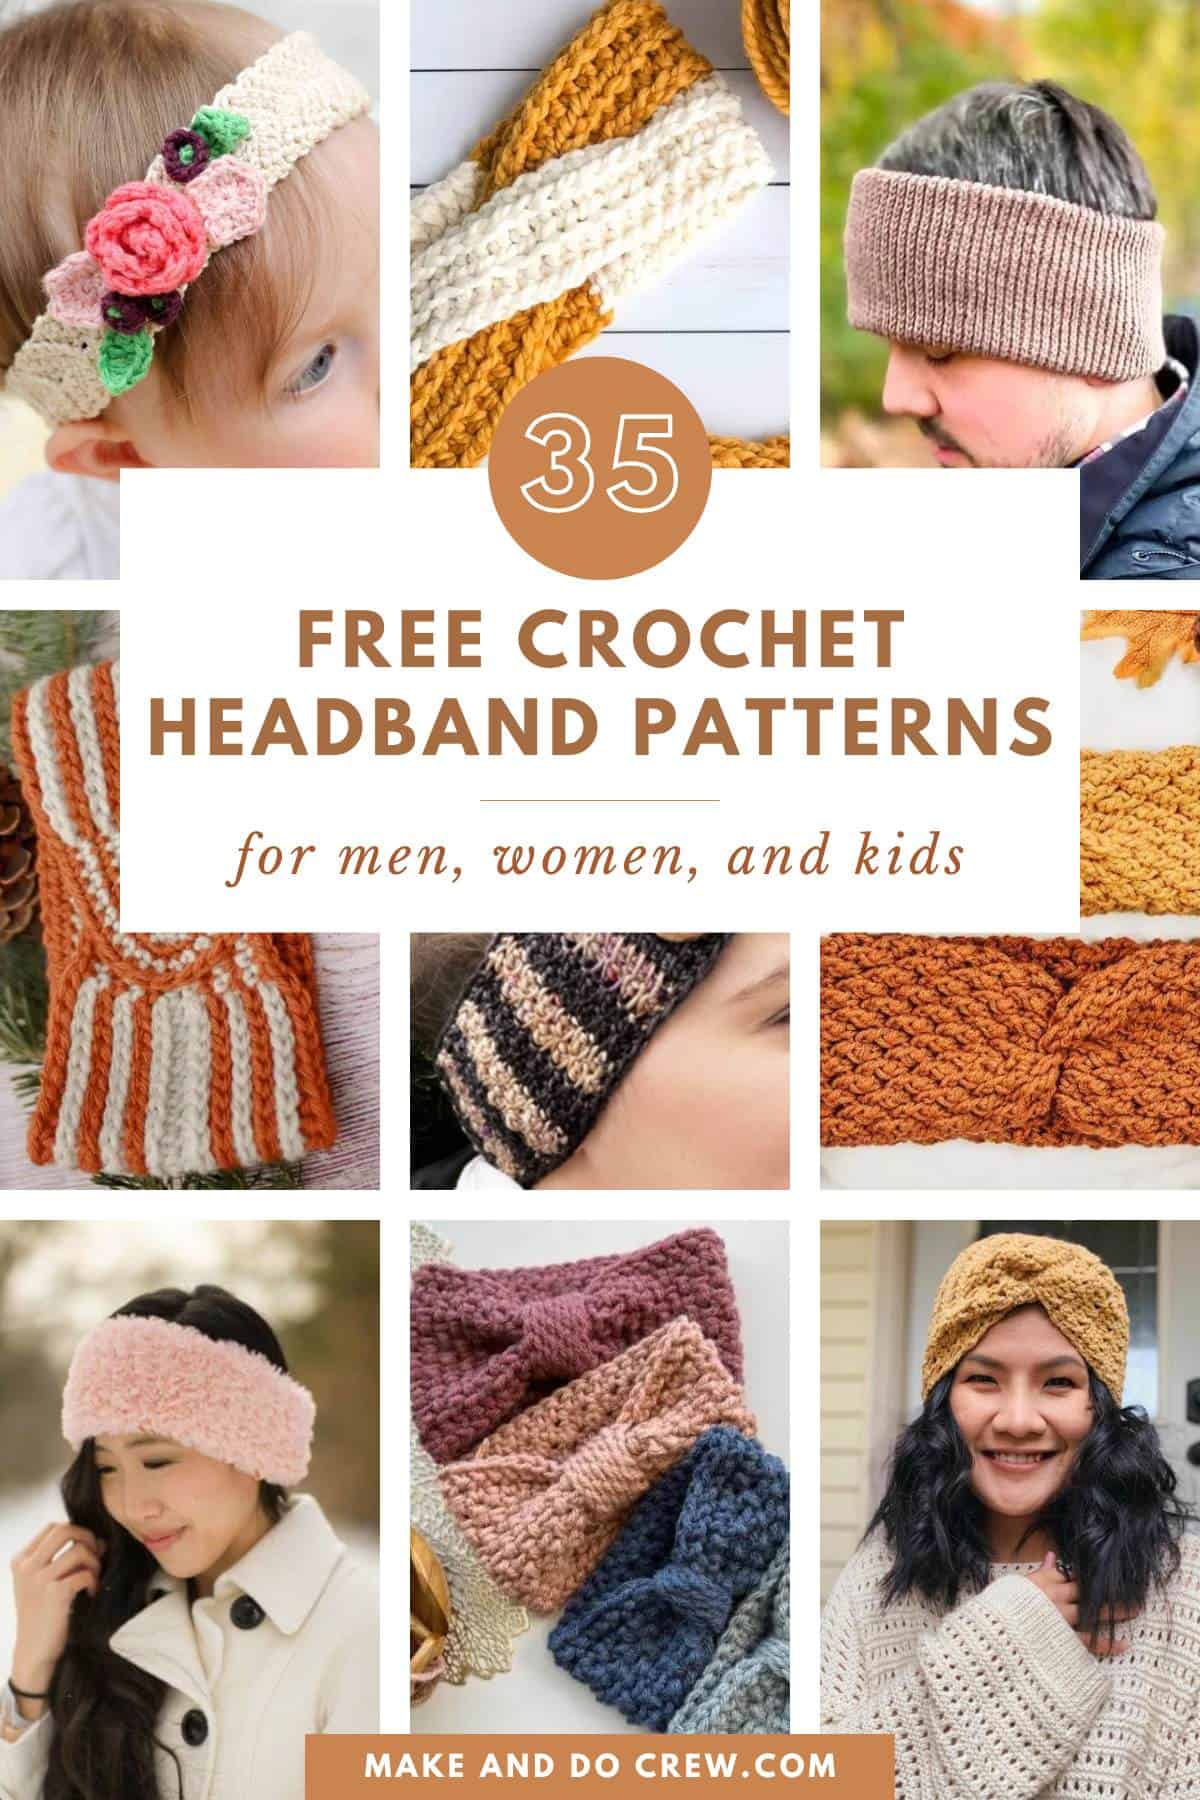 Skinny Picot Headband - Free Crochet Pattern - The Turtle Trunk